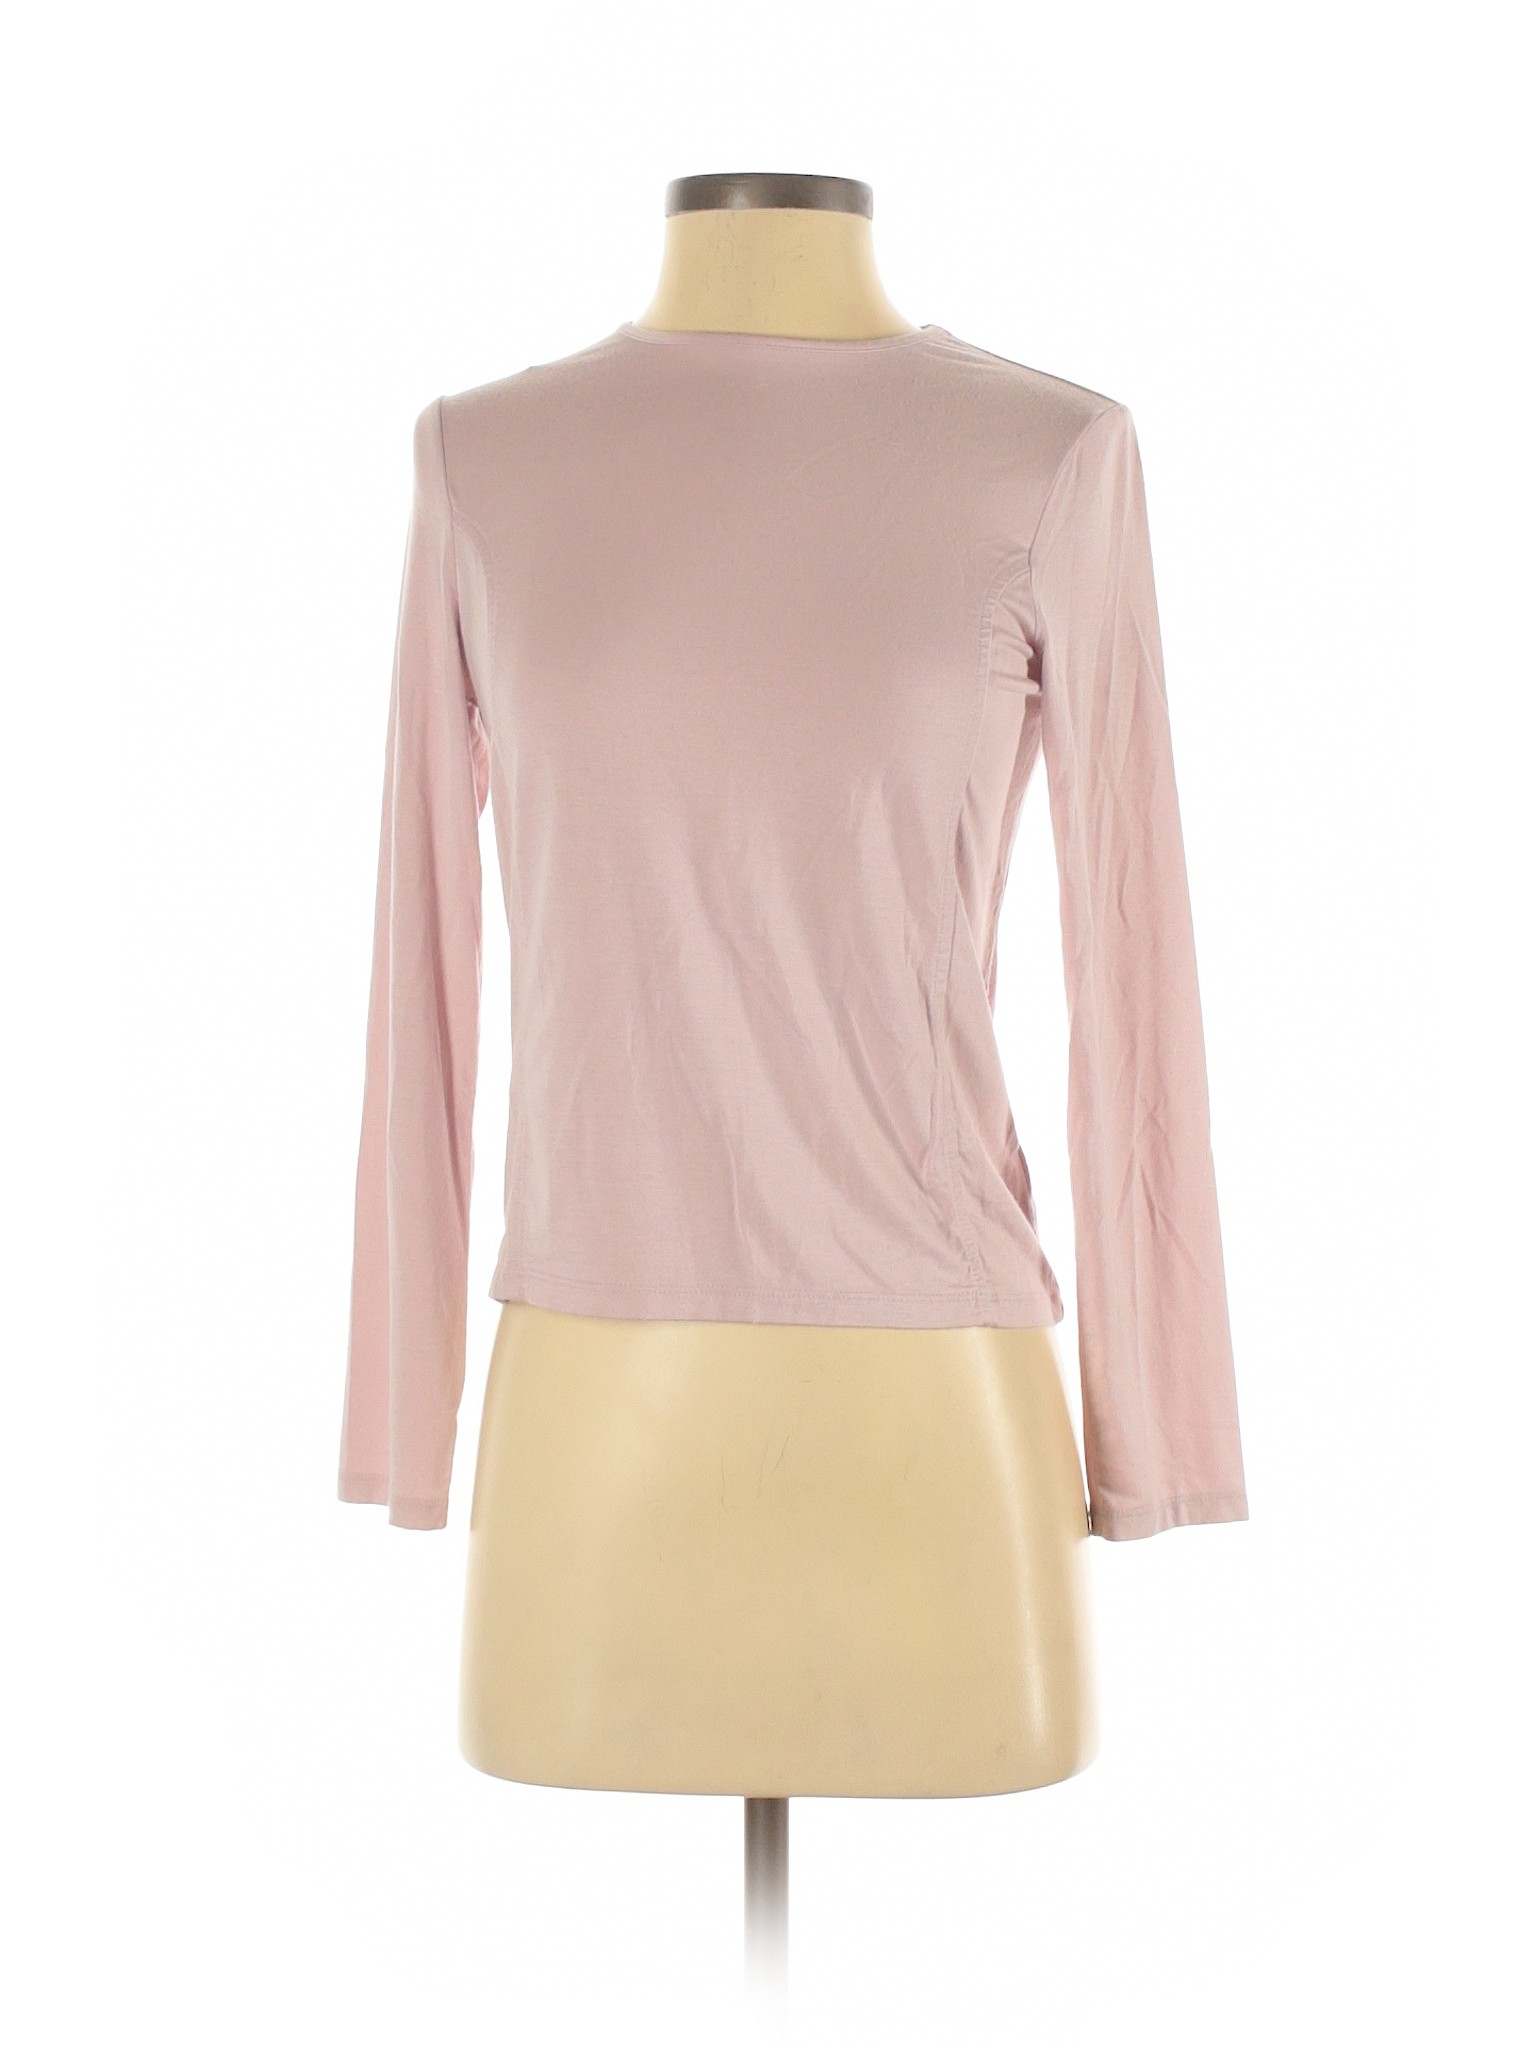 Anne Klein Women Pink Long Sleeve T-Shirt S Petites | eBay